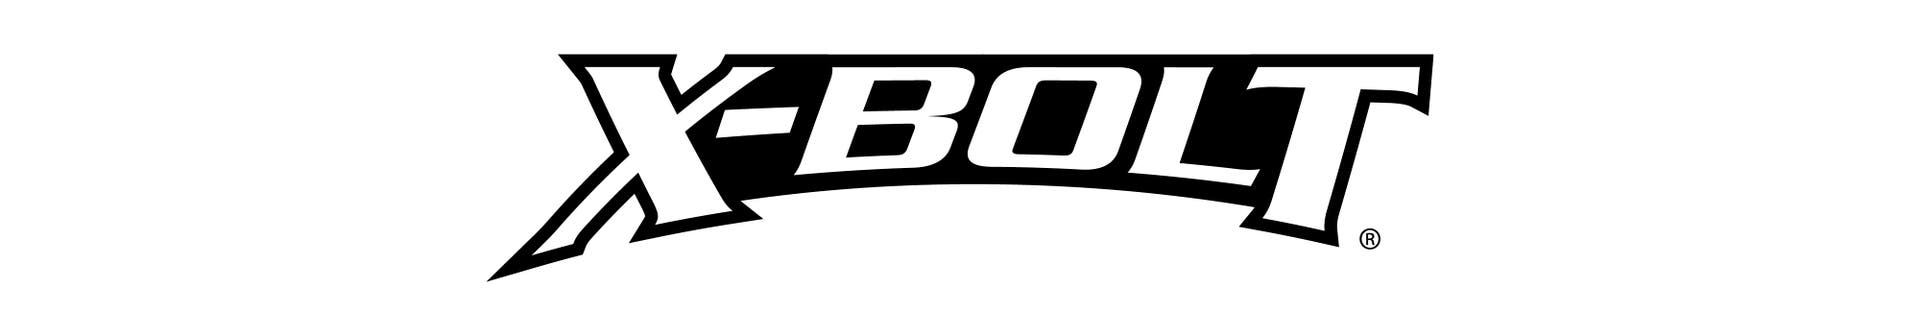 XBolt Logo